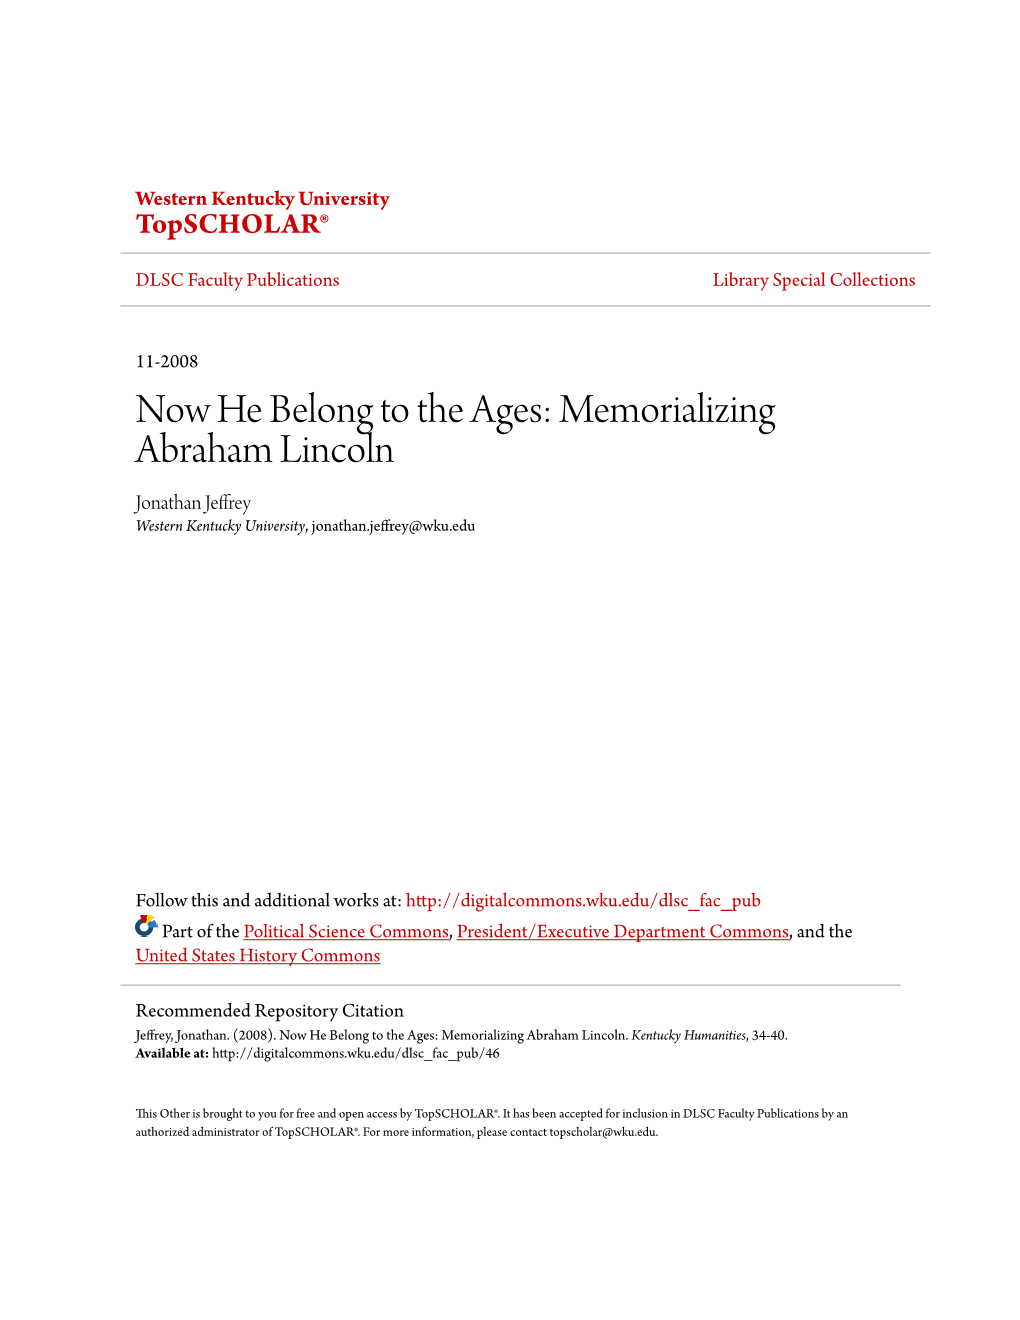 Now He Belong to the Ages: Memorializing Abraham Lincoln Jonathan Jeffrey Western Kentucky University, Jonathan.Jeffrey@Wku.Edu